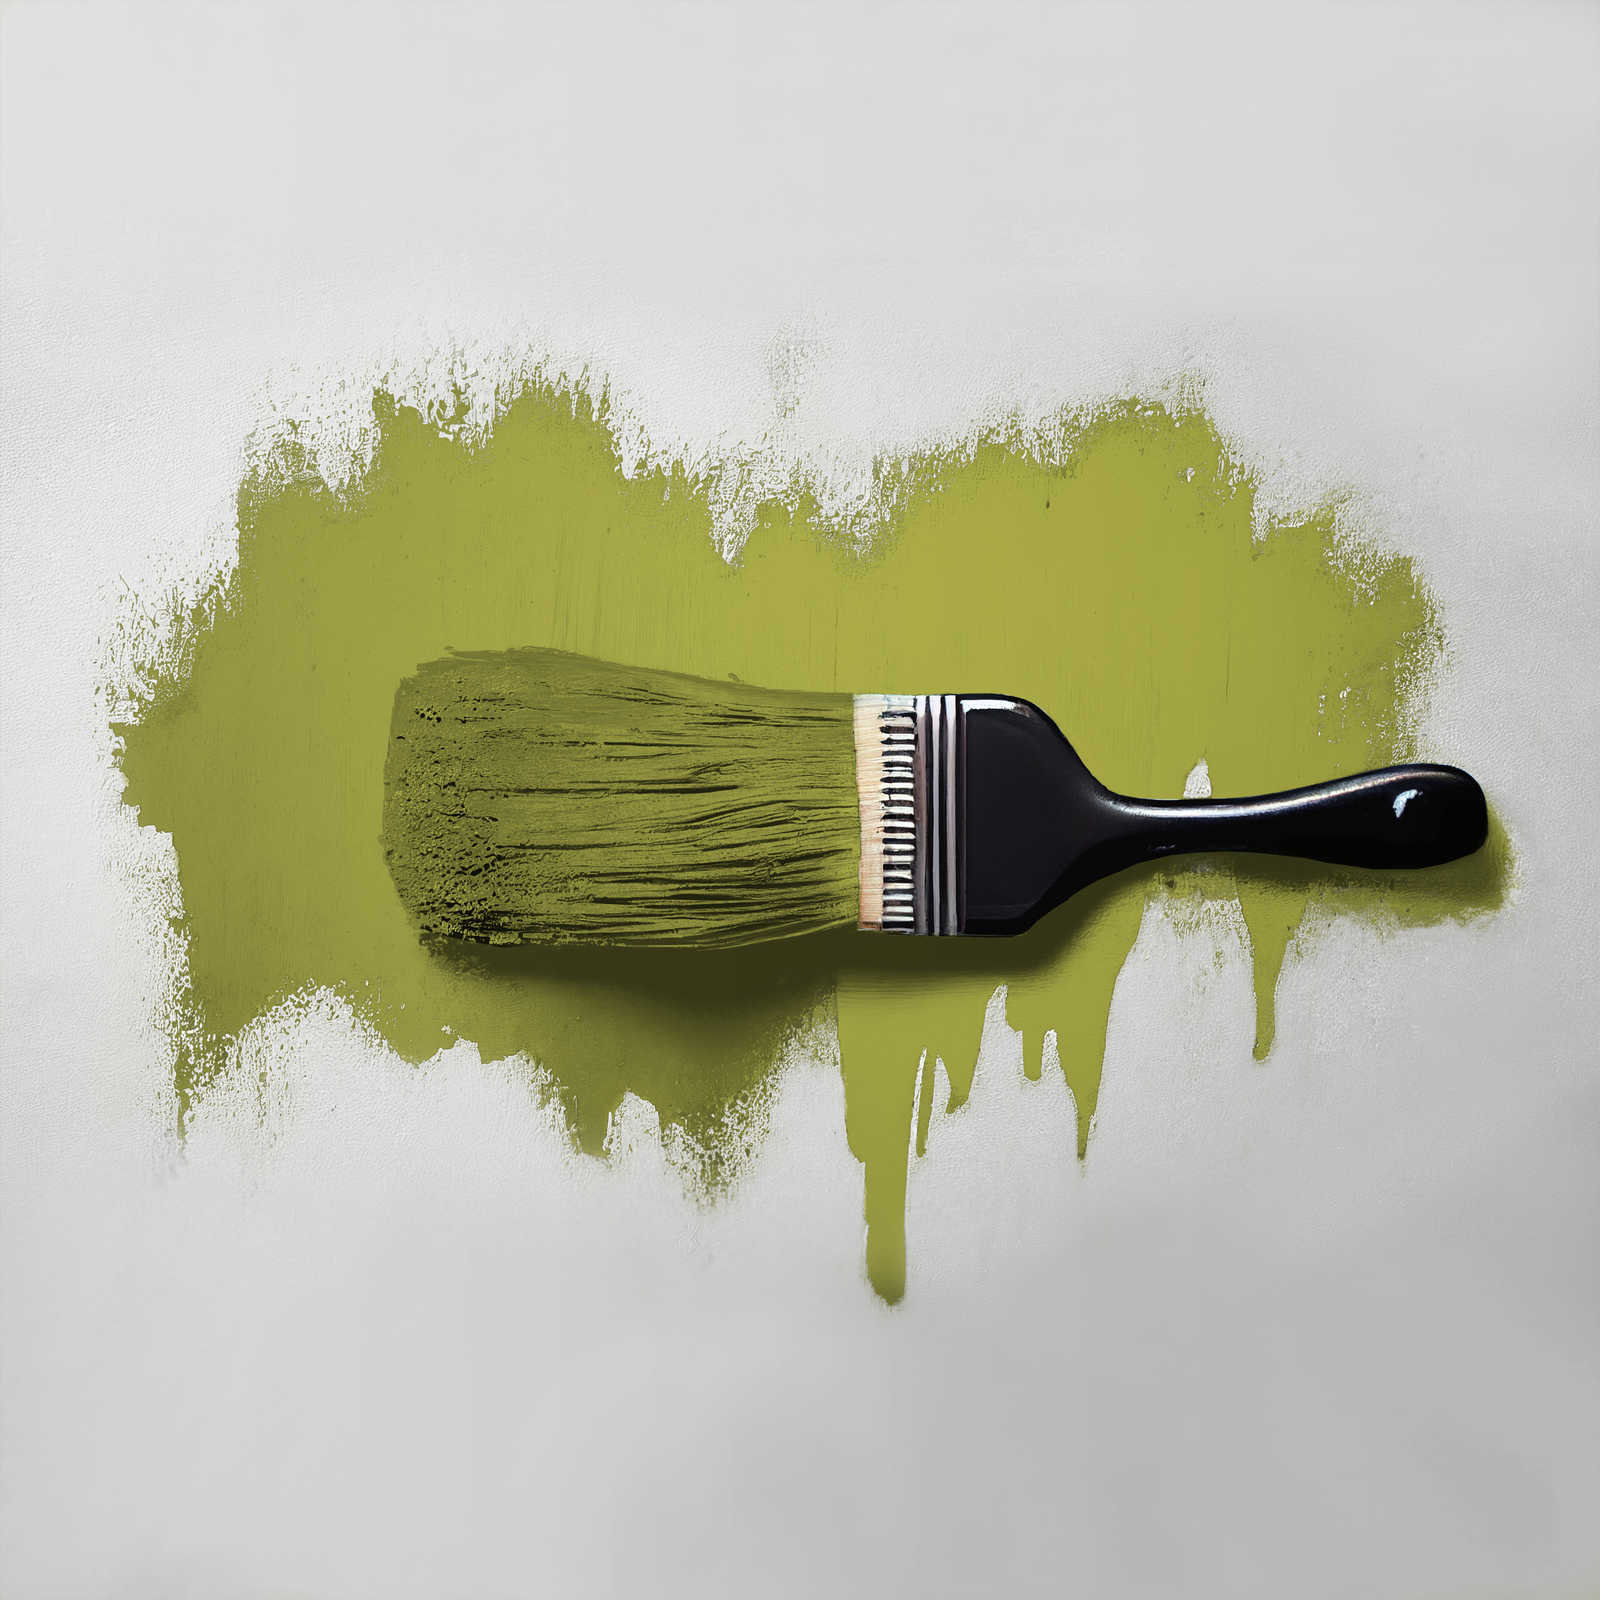             Pittura murale TCK4009 »Kitchy Kiwi« in giallo-verde brillante – 2,5 litri
        